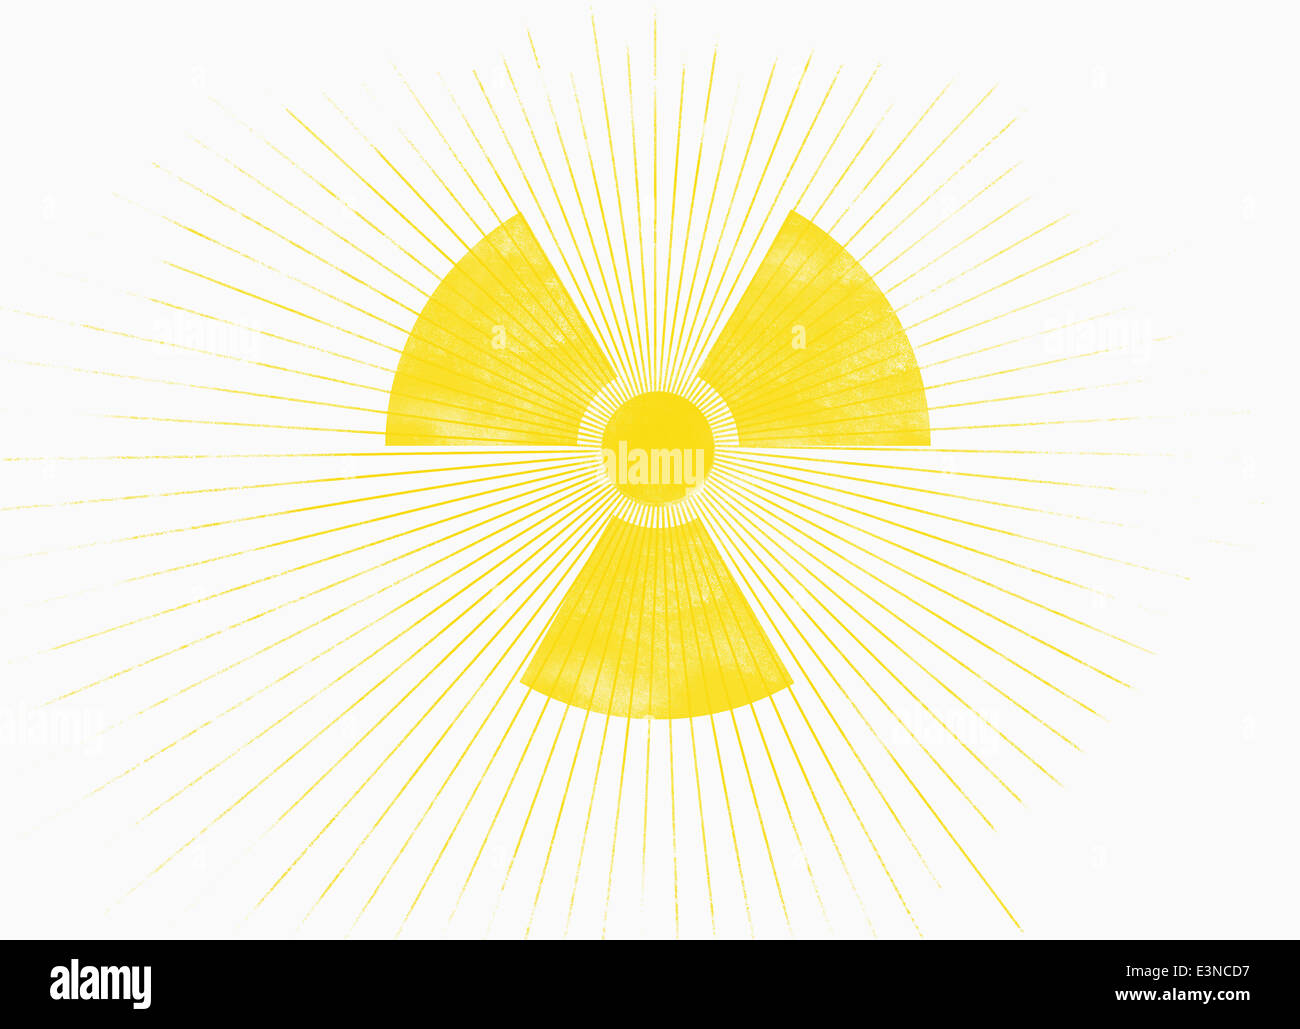 The sun in shape of a radioactive warning symbol Stock Photo